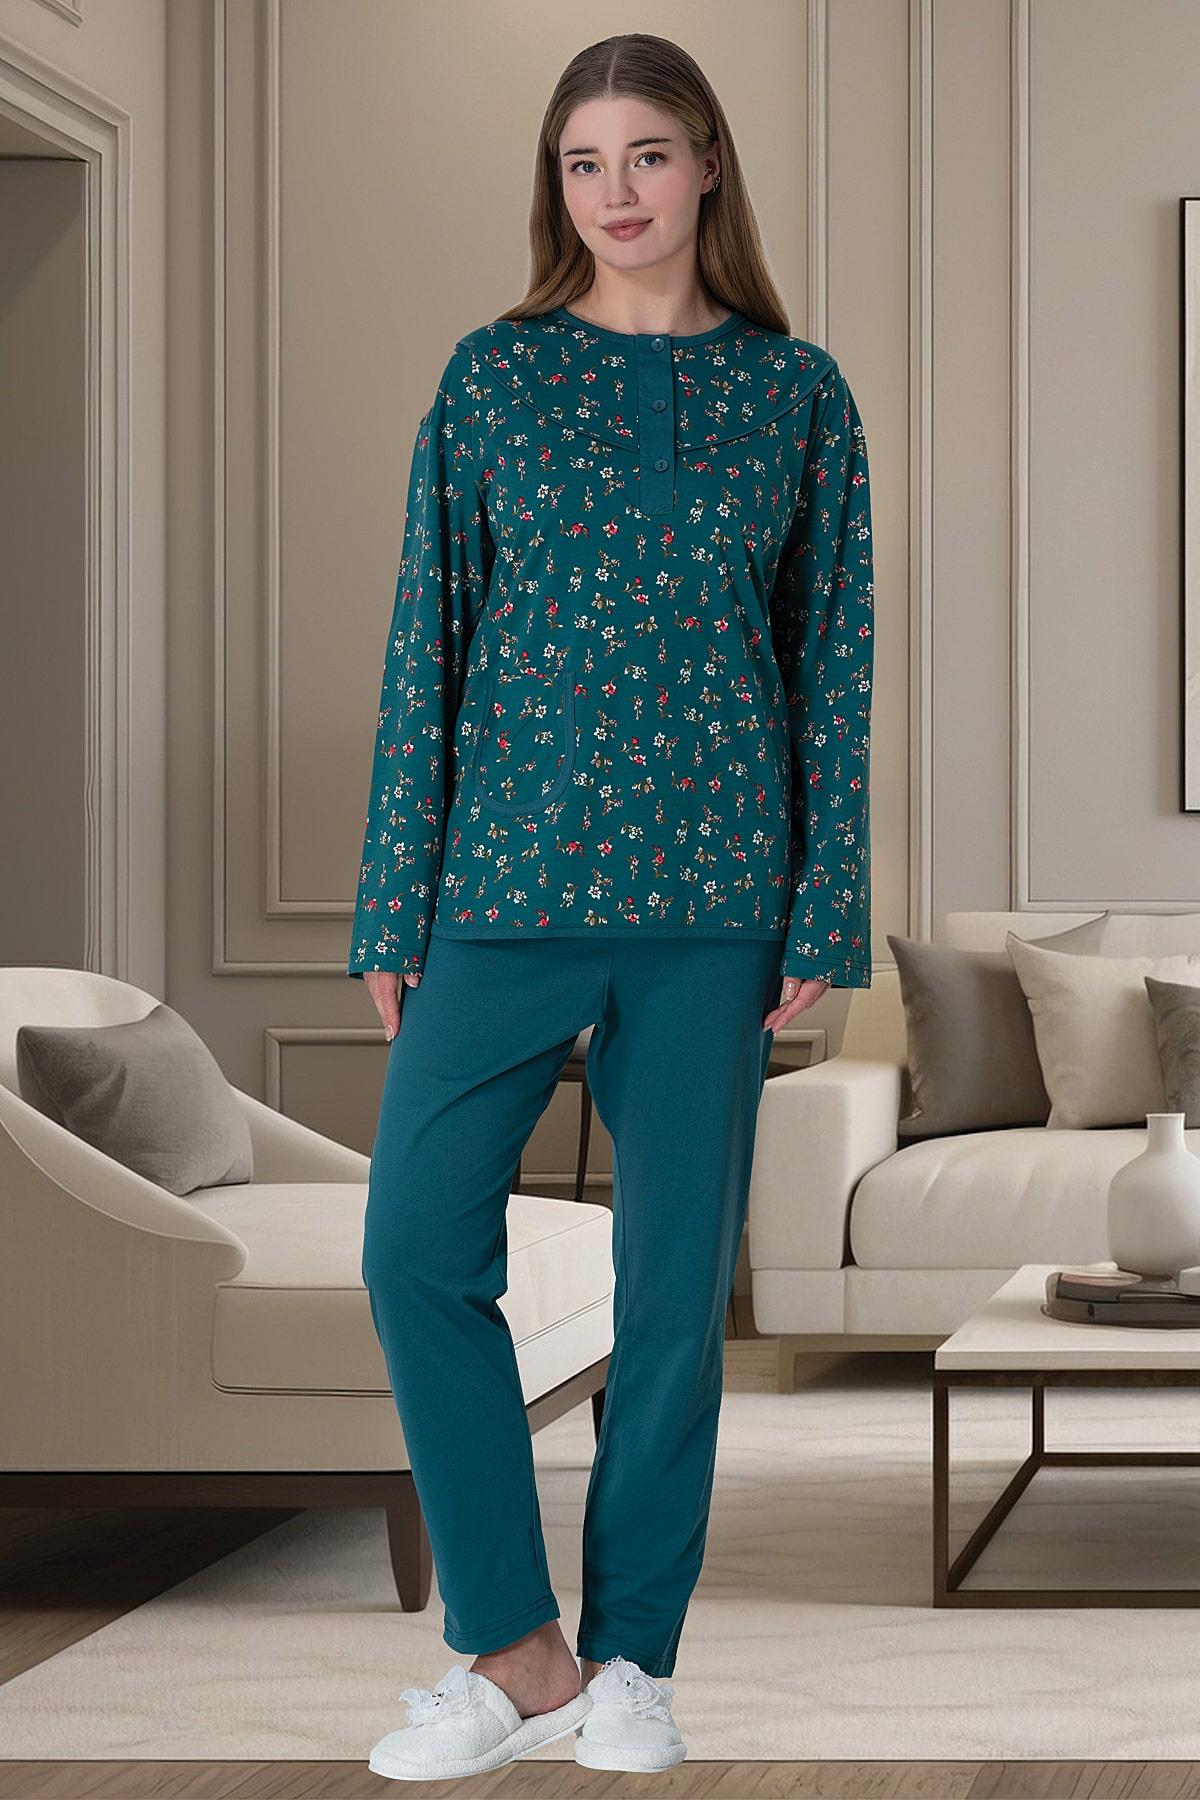 Shopymommy 6017 Flowery Plus Size Maternity & Nursing Pajamas Green